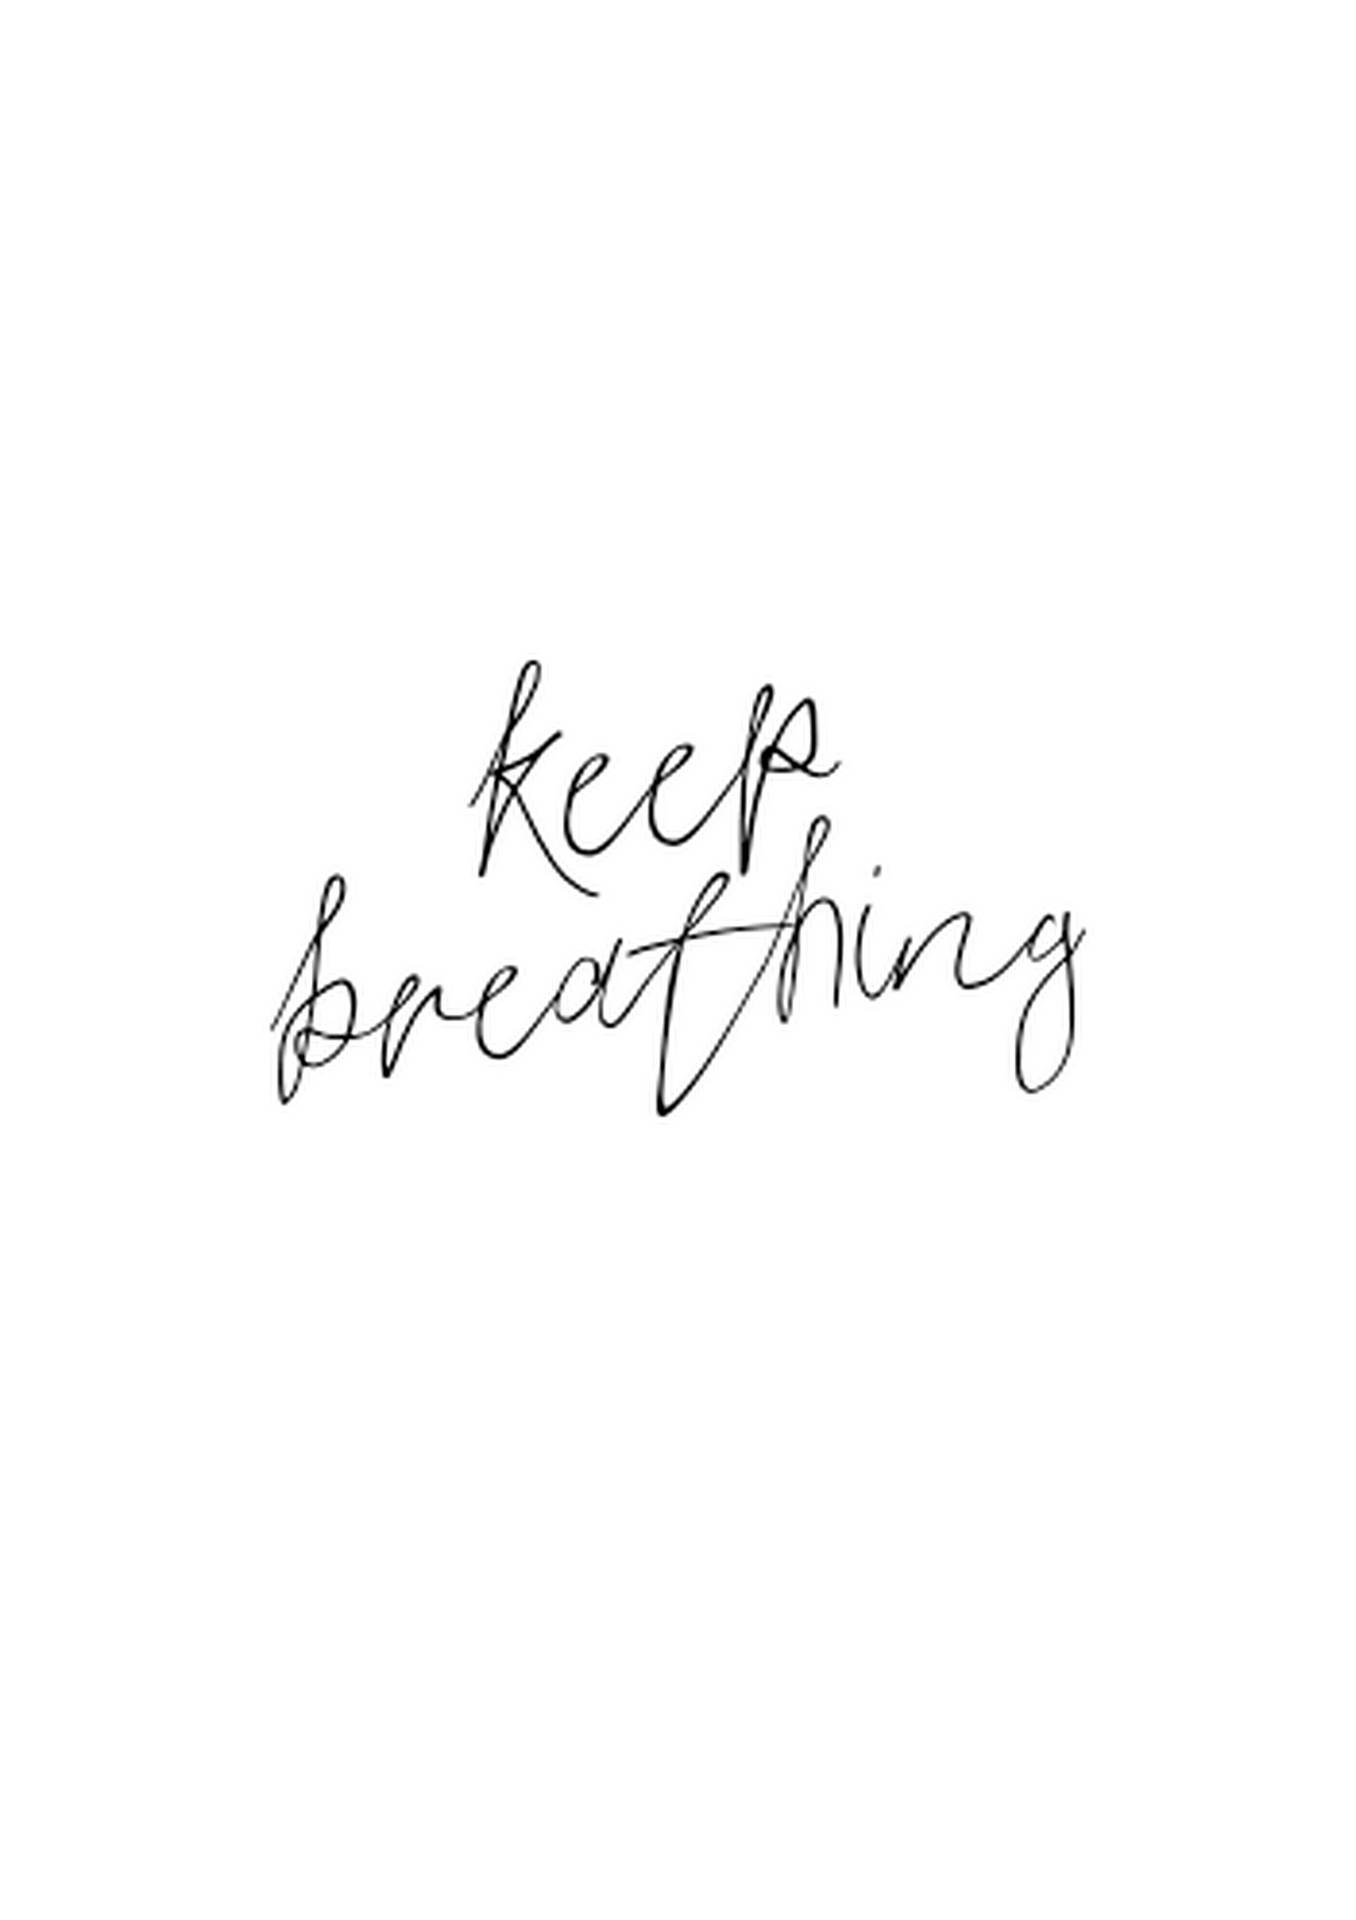 Inspirational 'Keep Breathing' Calligraphy Art Wallpaper